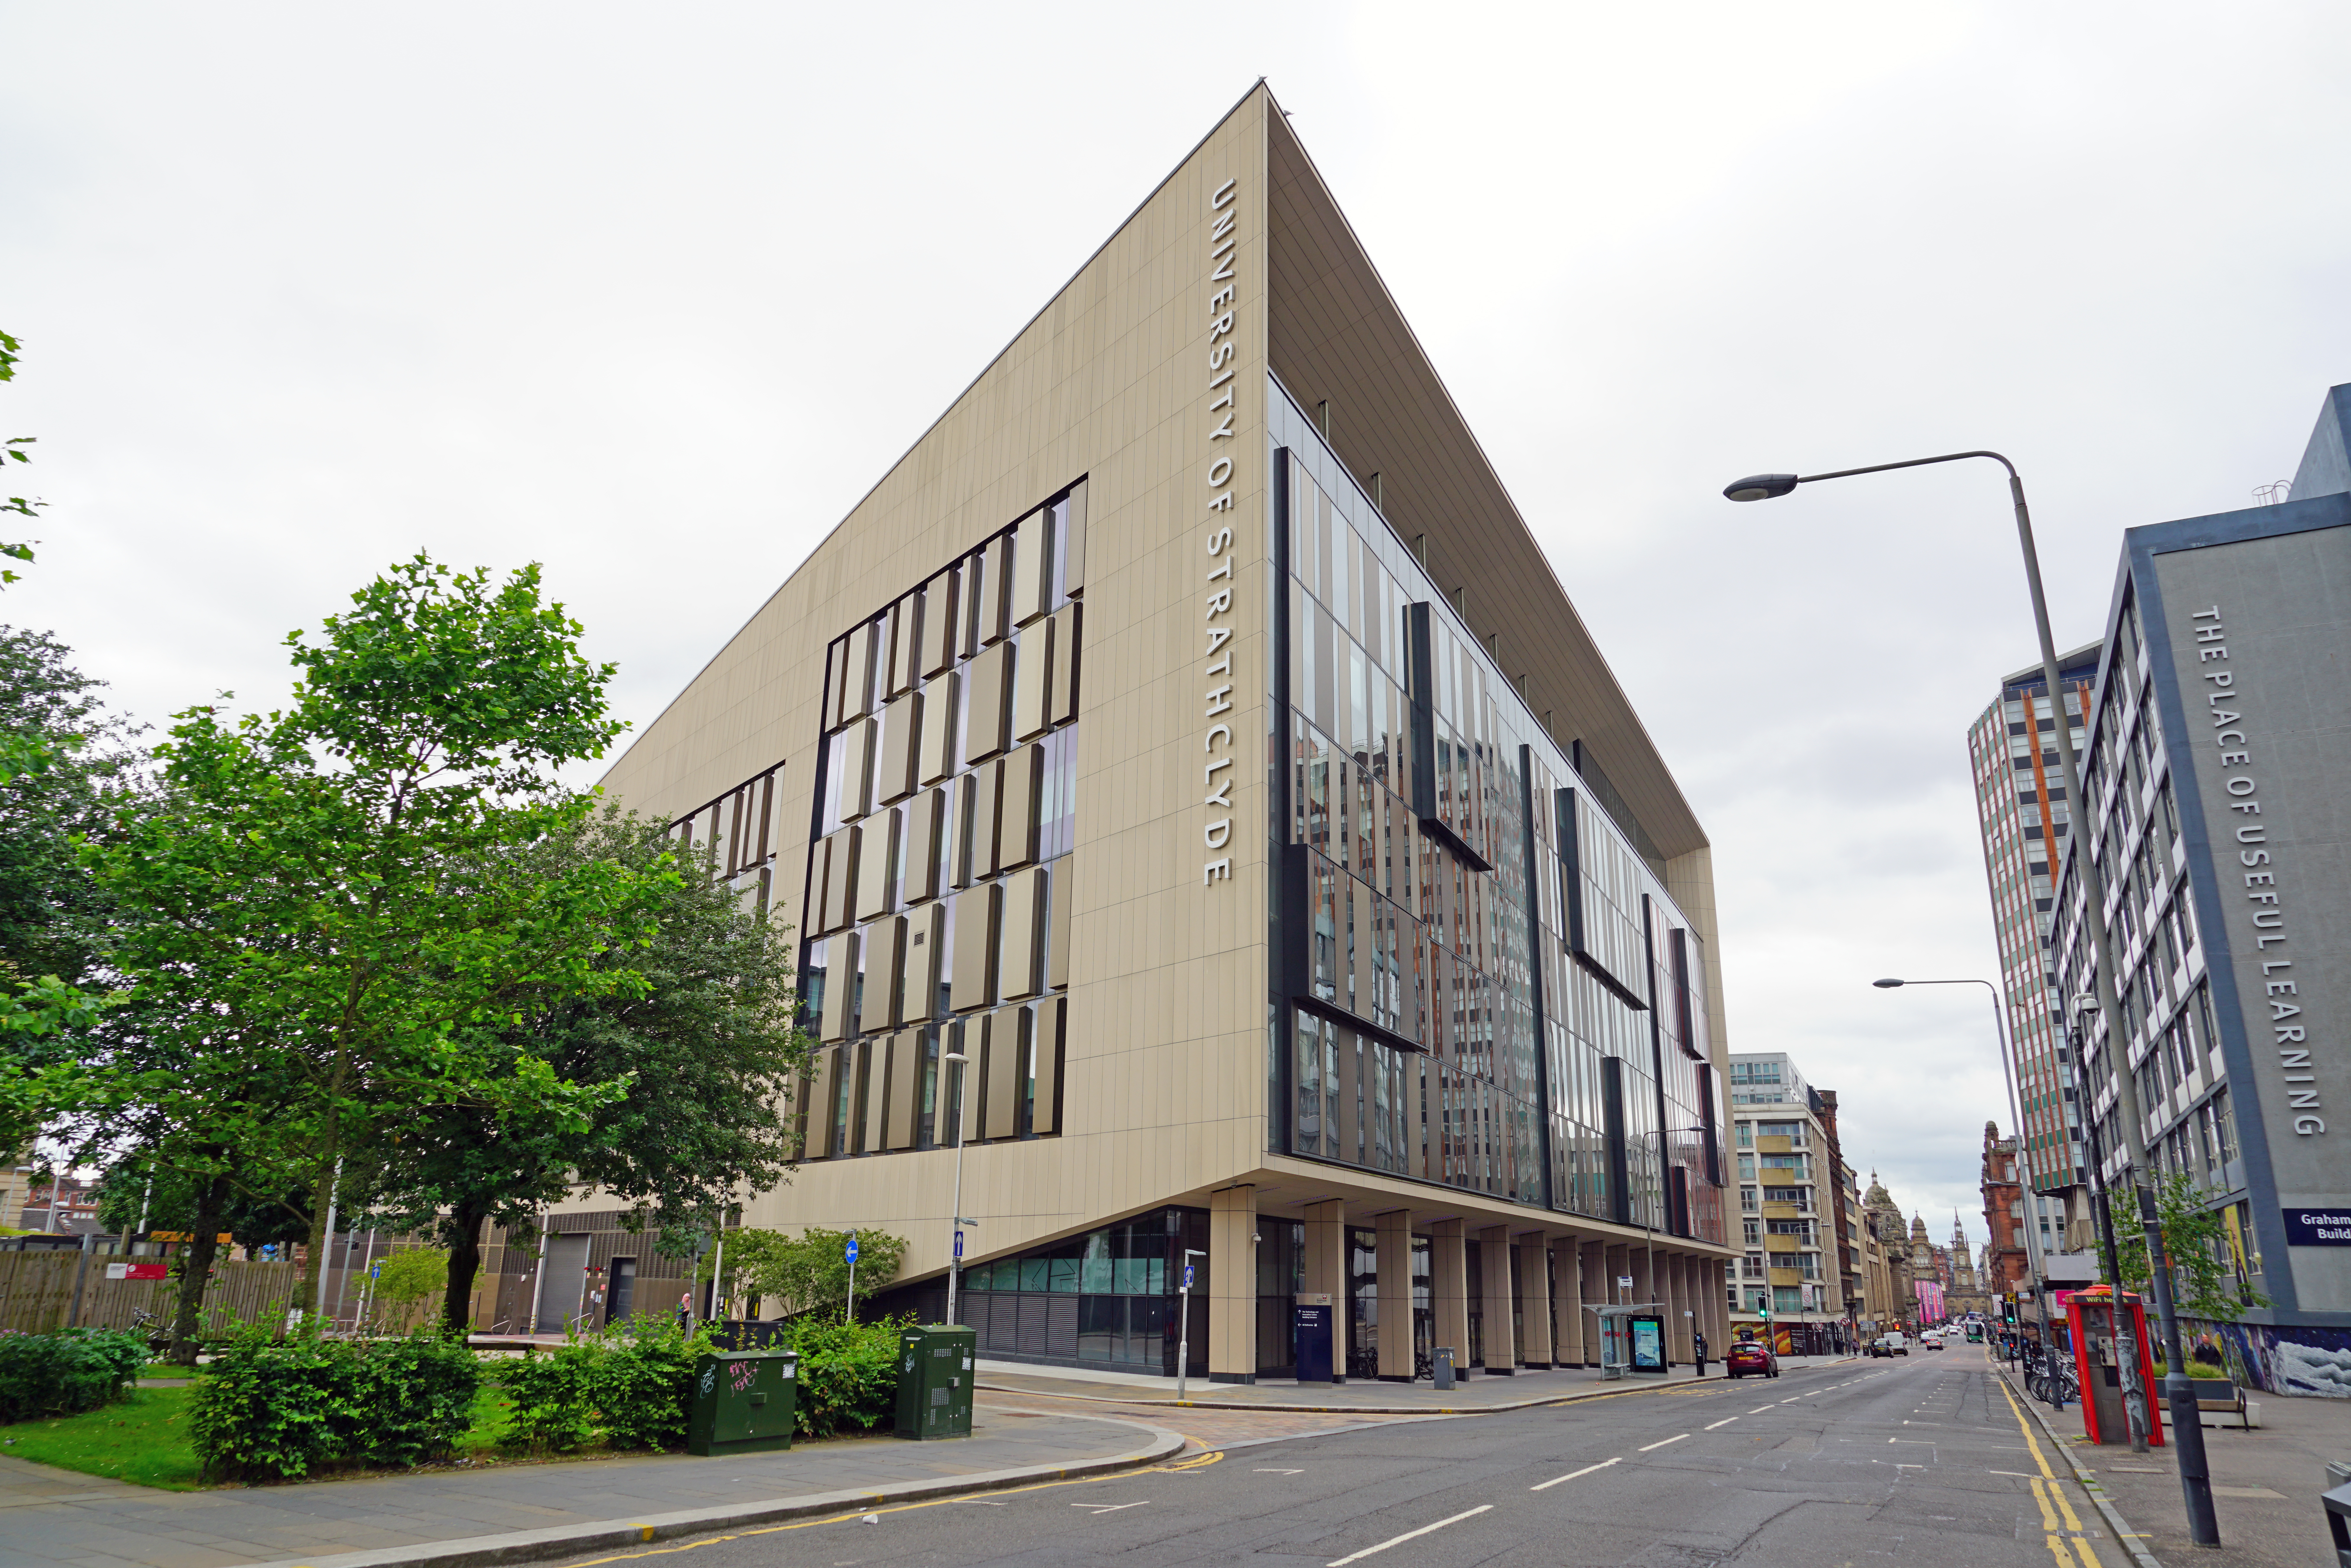 University of Strathclyde in Glasgow